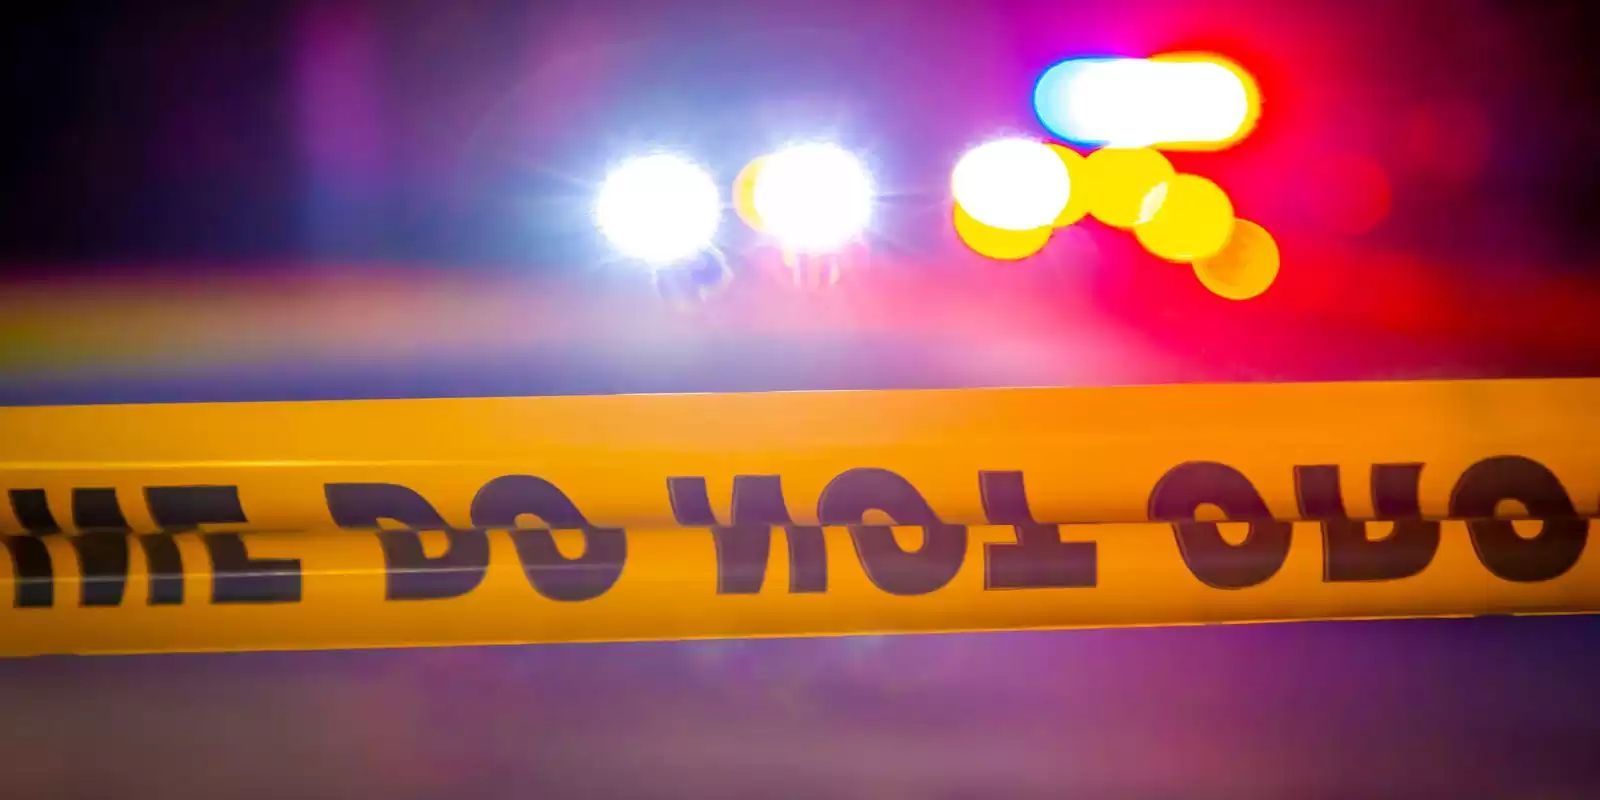 4 injured Walmart shooting Beavercreek Ohio,  police say suspected shooter dead